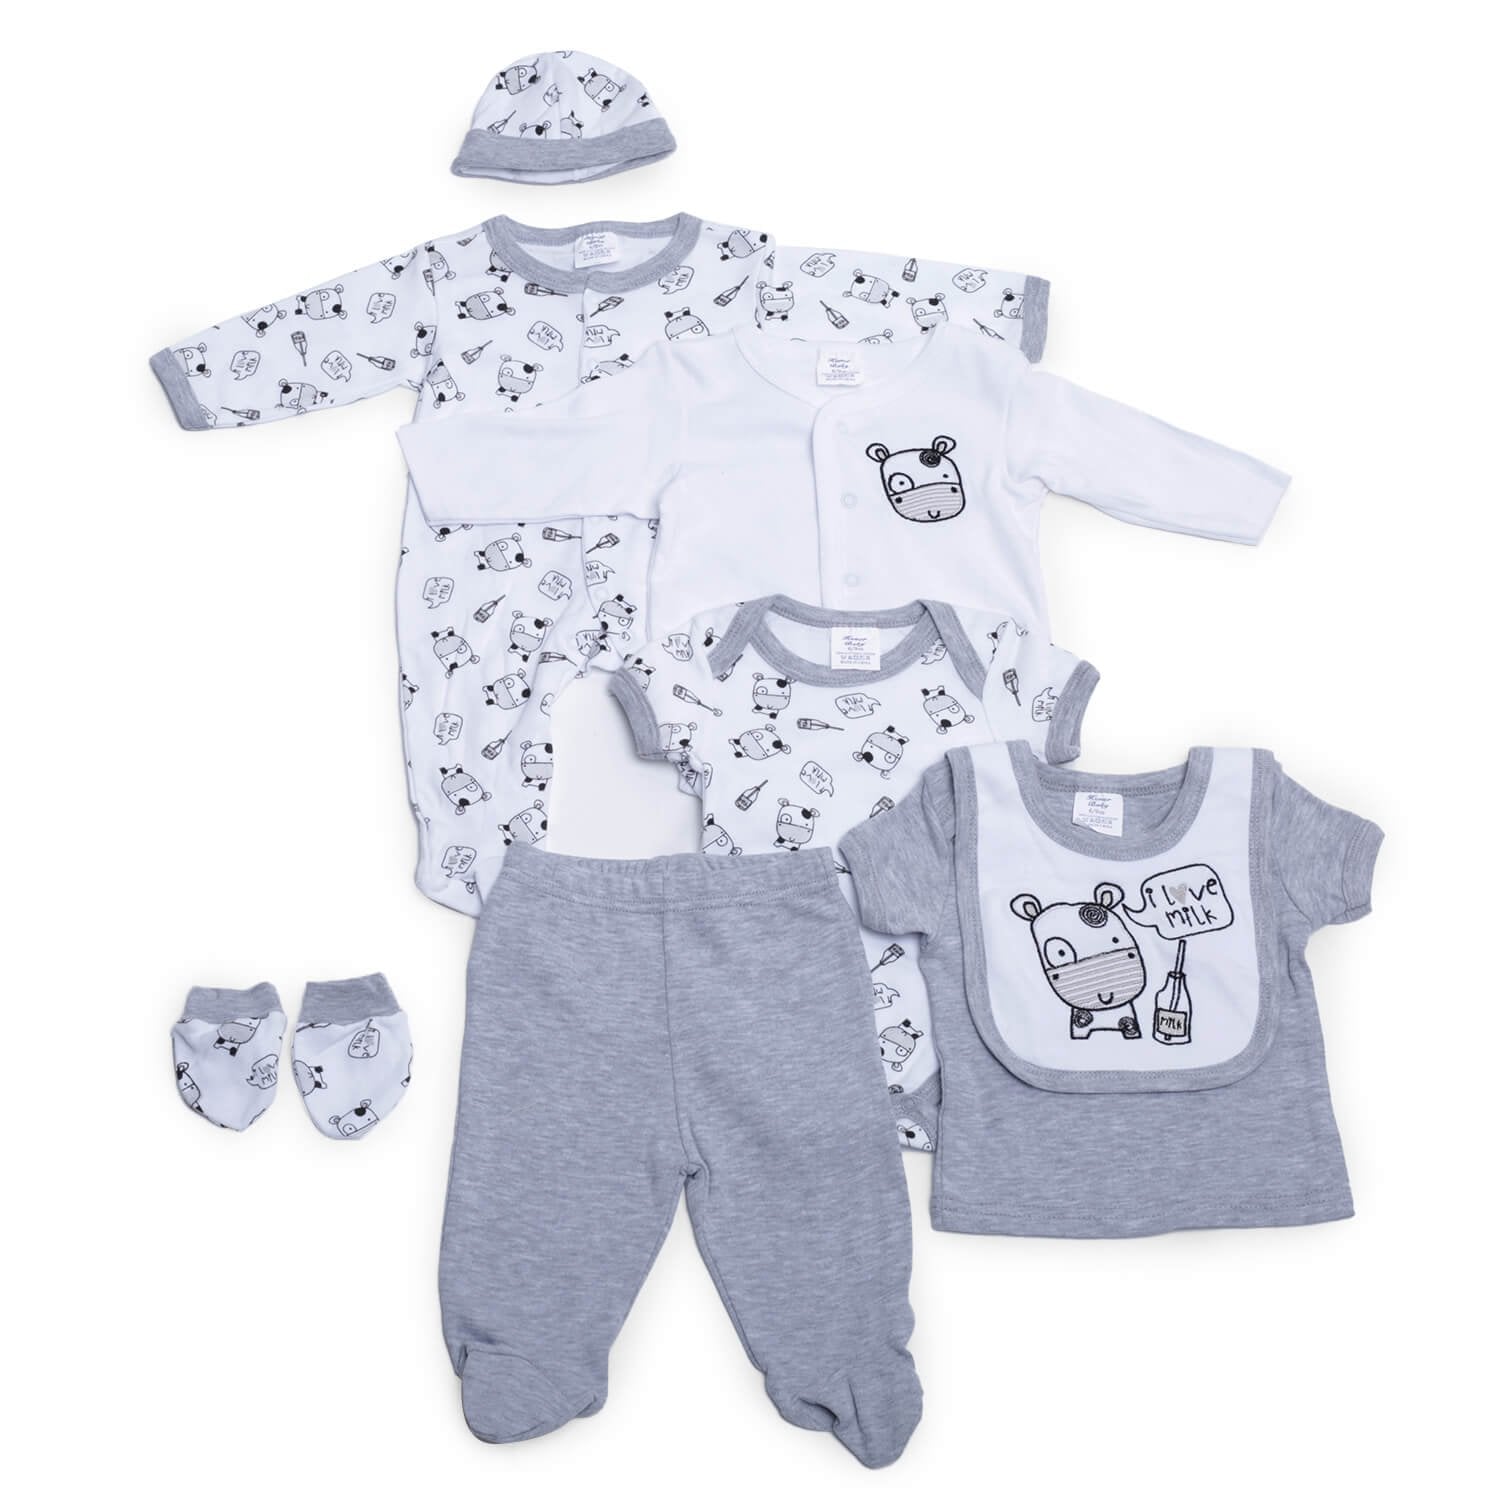 8 pcs Grey & White Cow Baby Girl/Boy Clothes Set (3-6 months) - Little Surprise Box8 pcs Grey & White Cow Baby Girl/Boy Clothes Set (3-6 months)